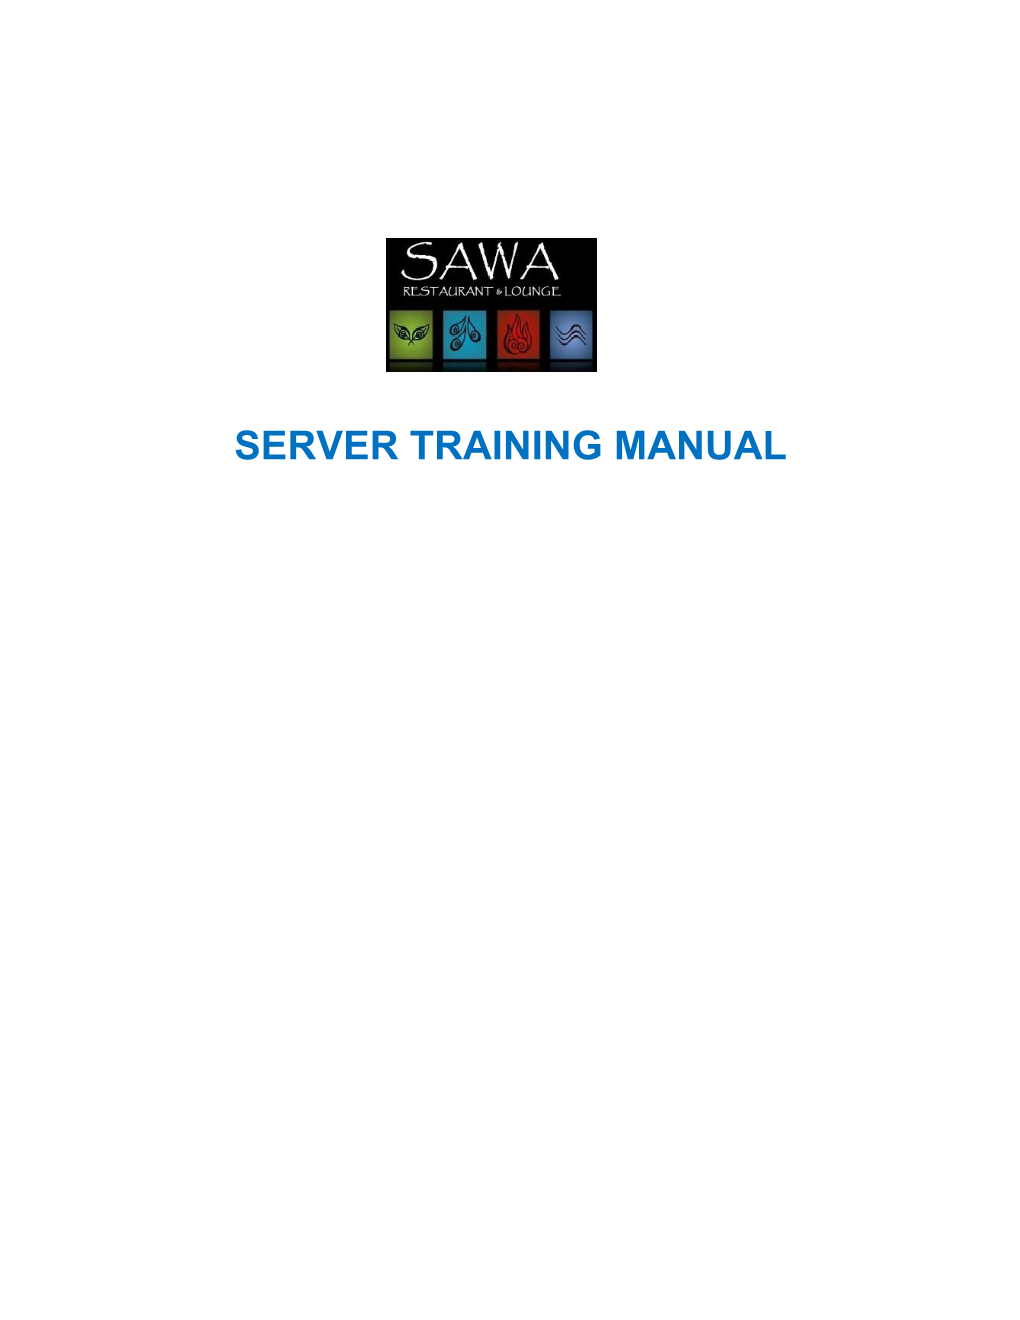 Server Training Manual s1